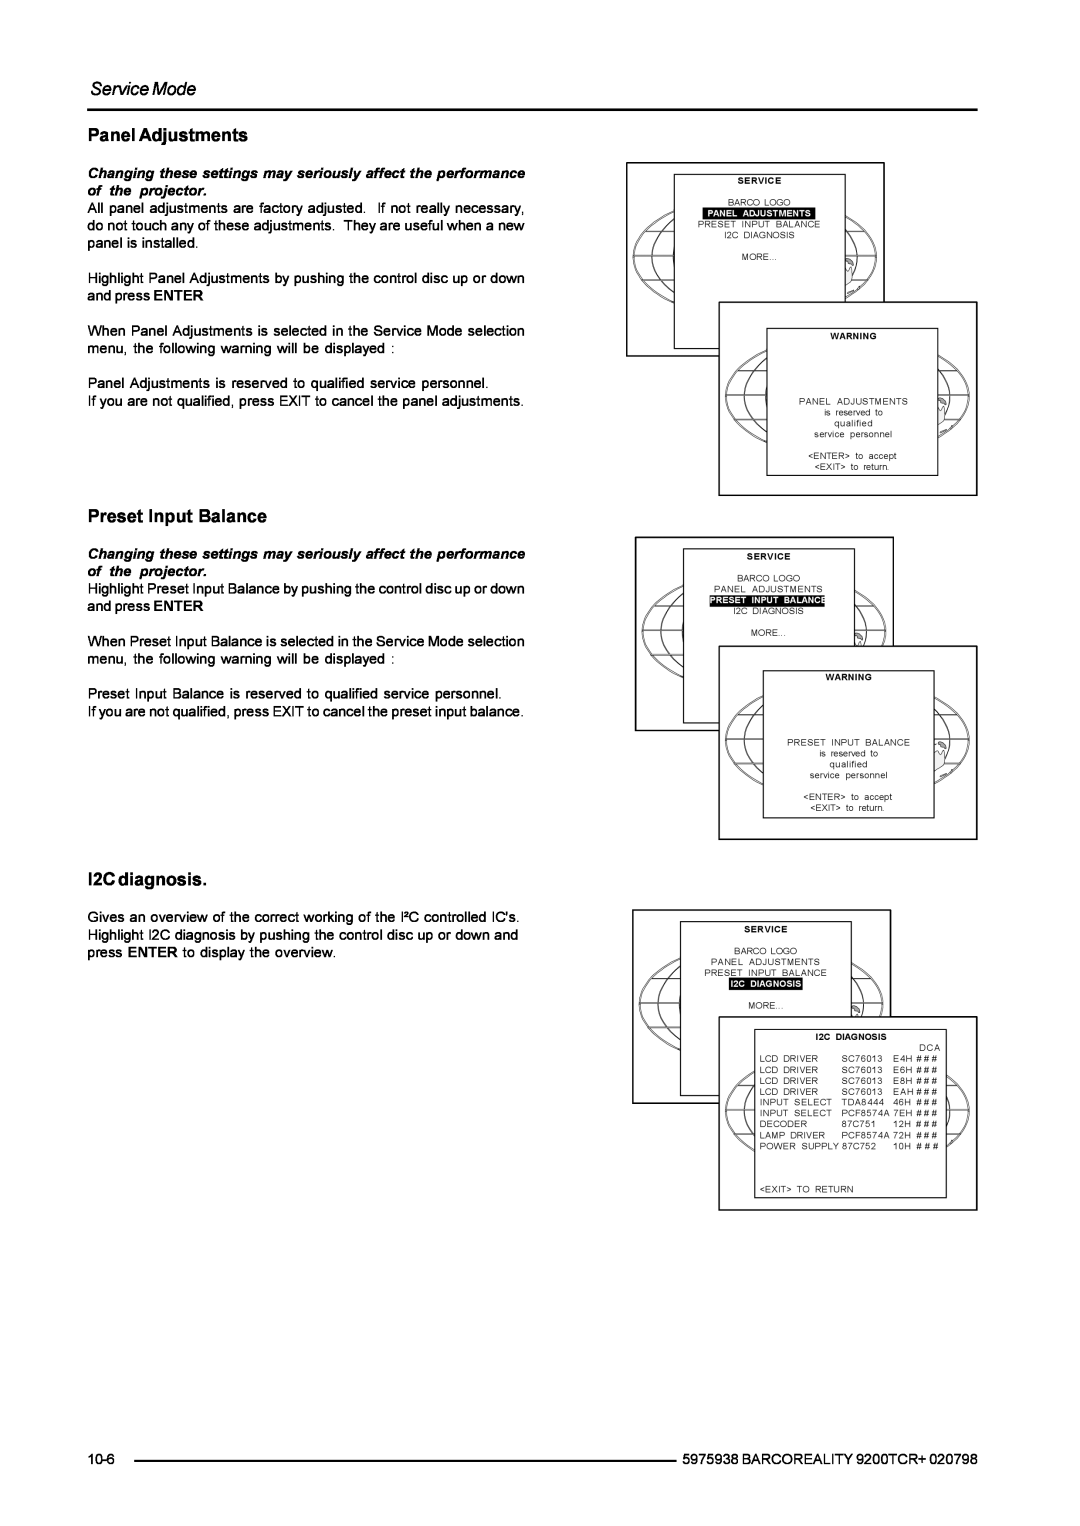 Barco R9001390 manual Panel Adjustments, Preset Input Balance, I2C diagnosis, Service Mode, I2C DIAGNOSIS 